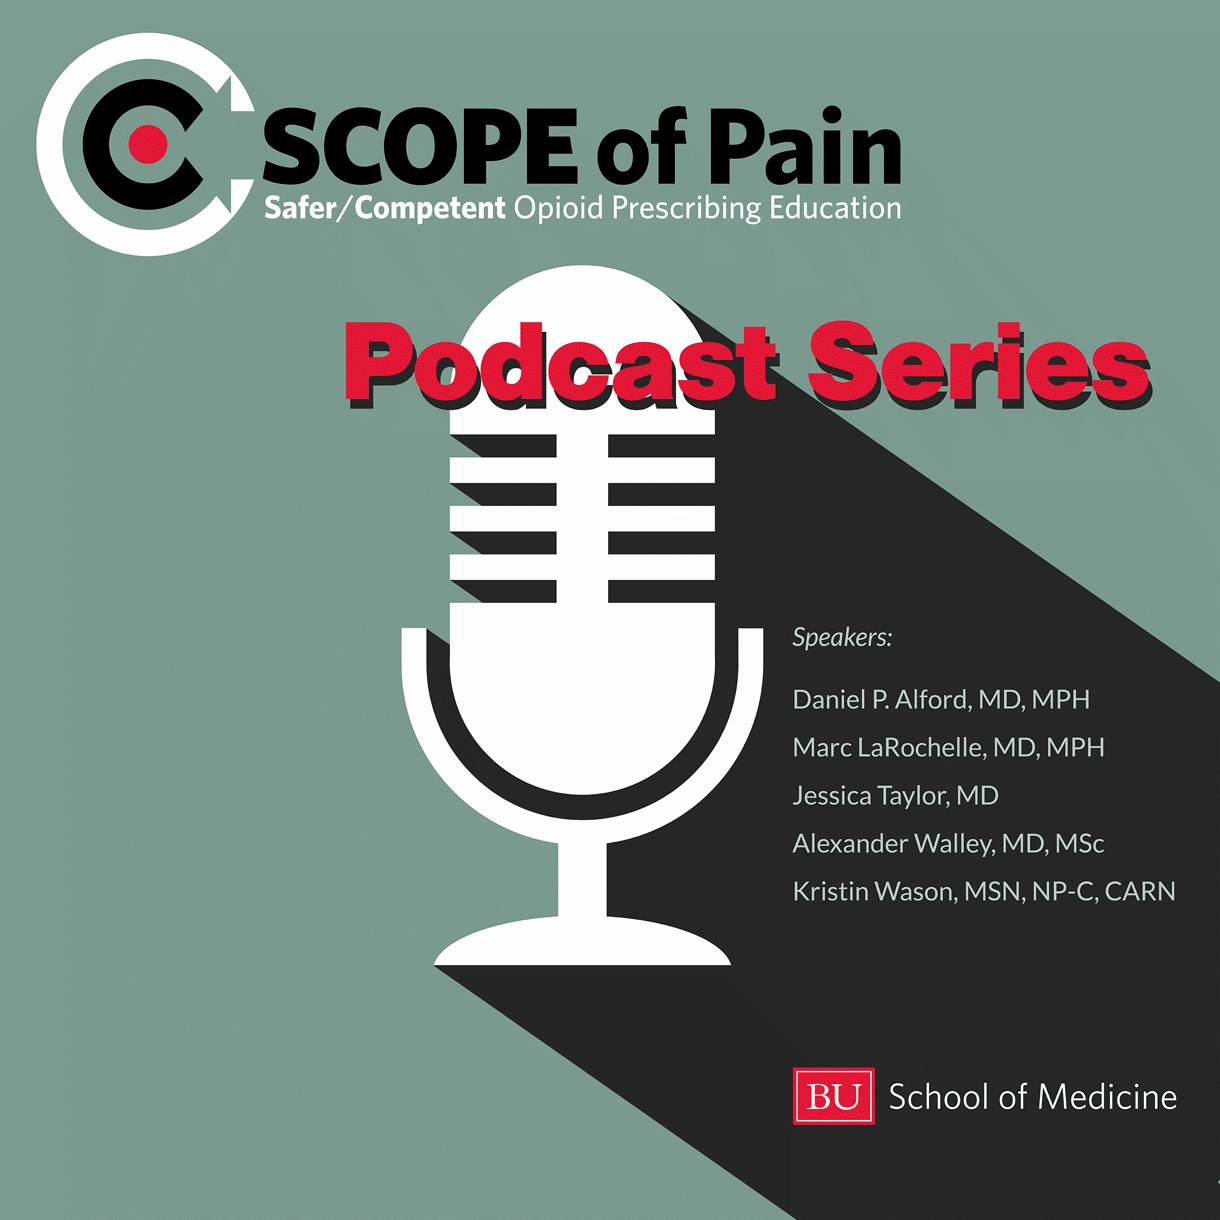 SCOPE of Pain (Core curriculum) – Podcast series